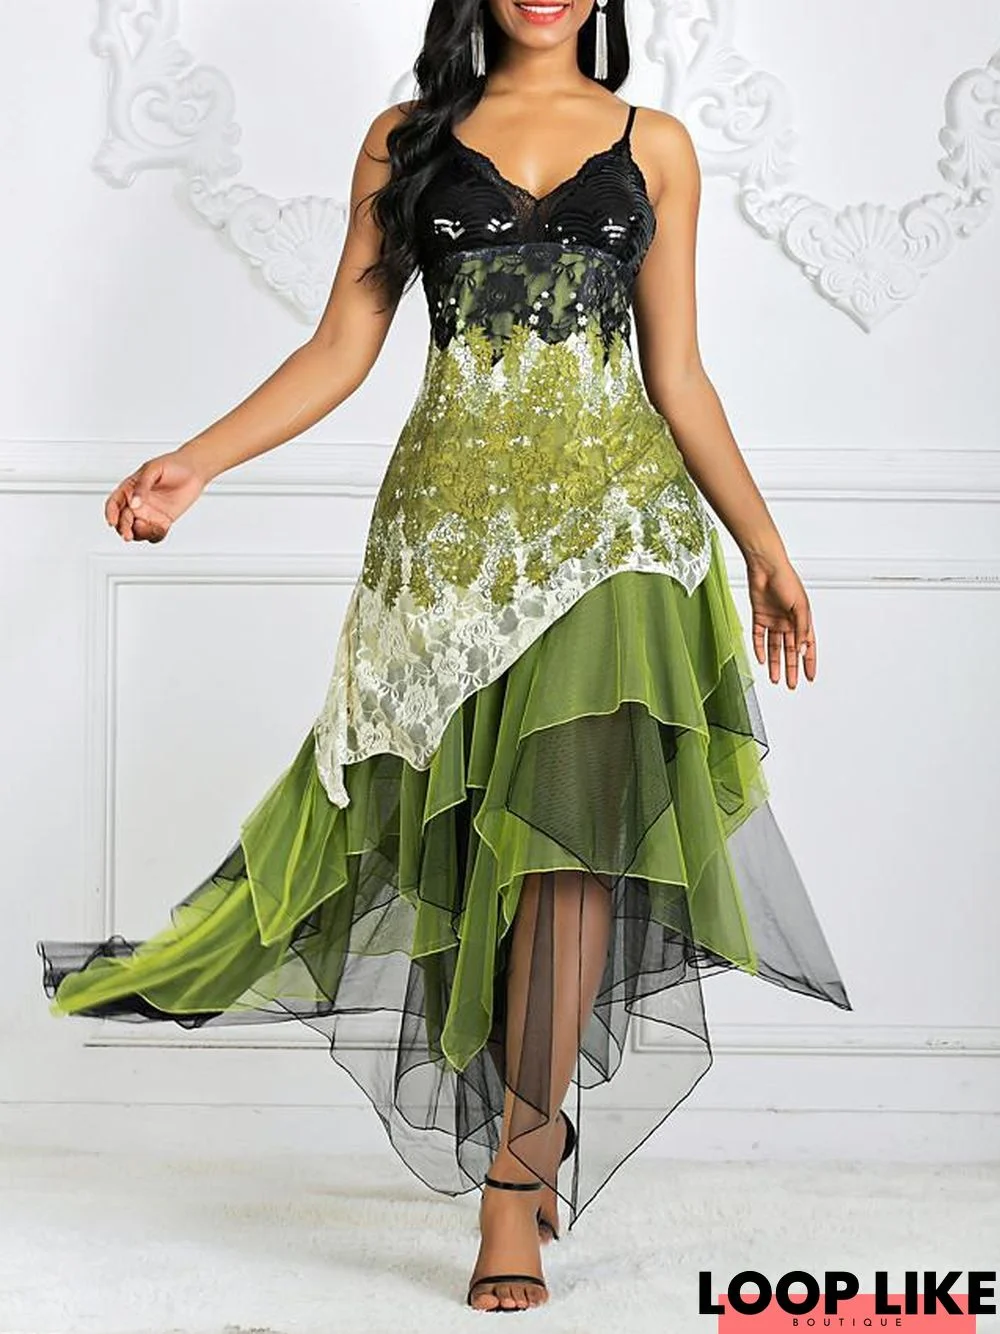 Women's Strap Dress Midi Dress Sleeveless Geometric Print Spring & Summer Hot Elegant Black Army Green